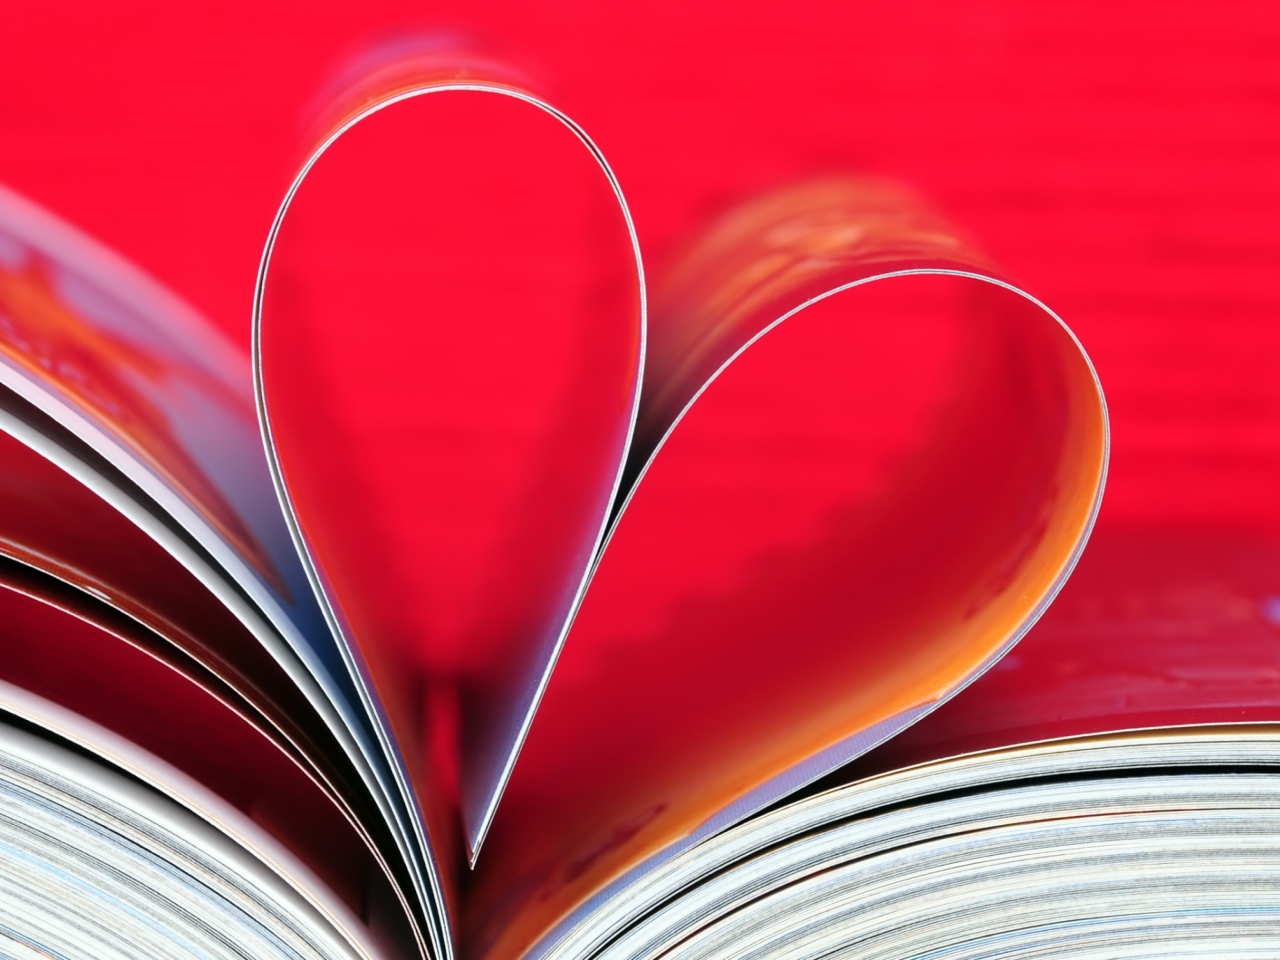 Das Book Pages Form A Heart Wallpaper 1280x960